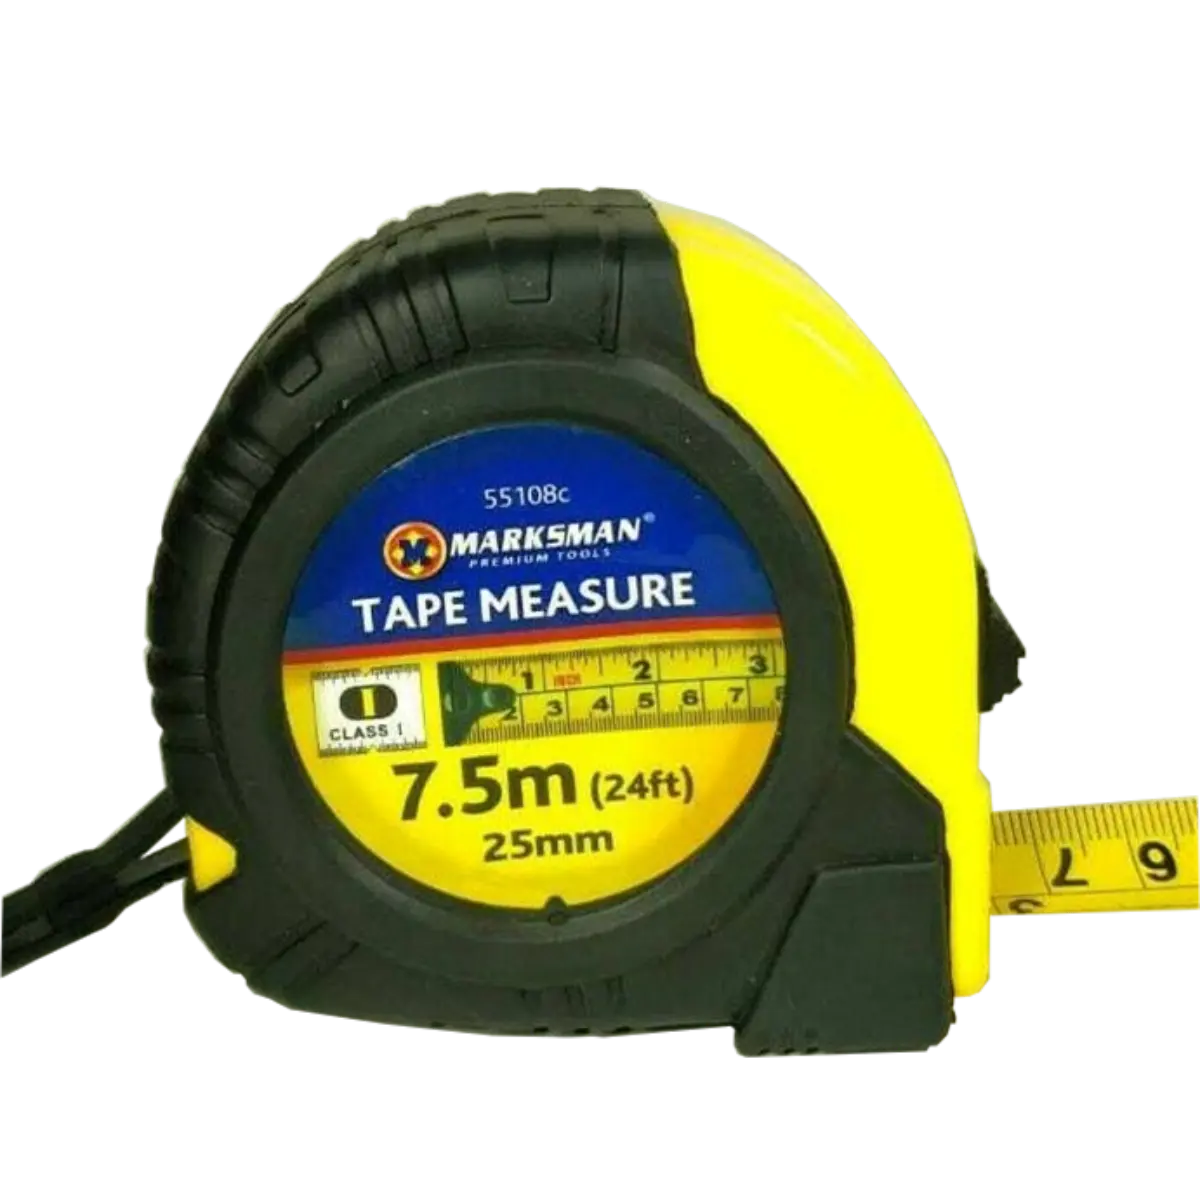 7.5mt Retractable Rubberised Tape Measure easy lock & release, durable impact resistant